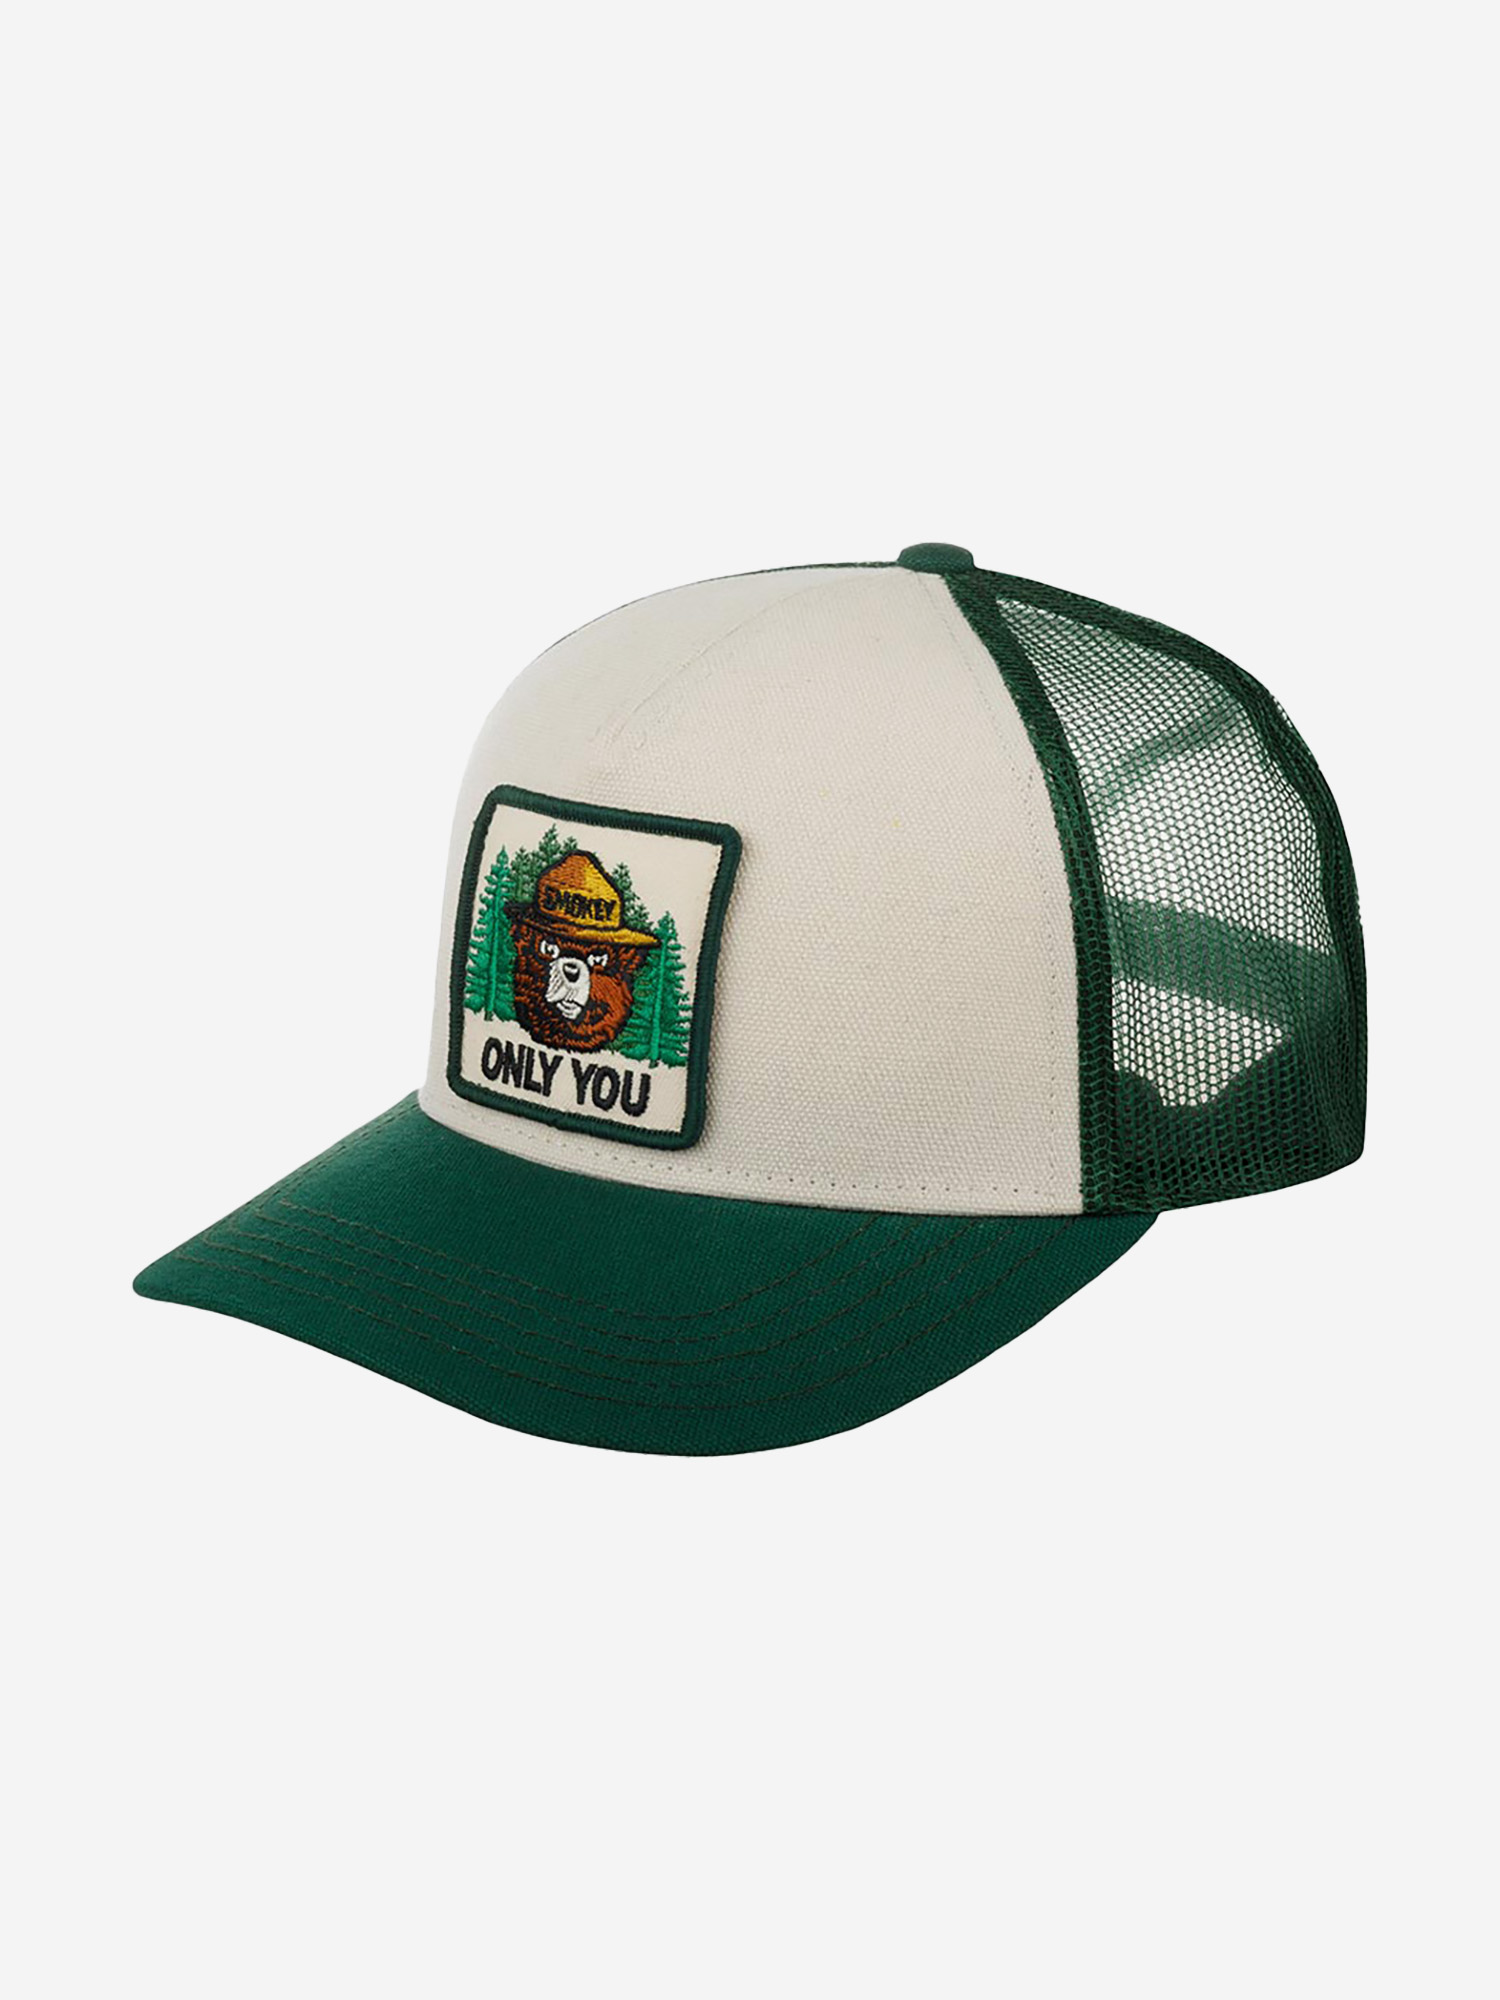 Бейсболка с сеточкой AMERICAN NEEDLE 42960A-SBEAR Smokey Bear Valin (зеленый), Зеленый бейсболка с сеточкой goorin brothers 101 0480 зеленый зеленый